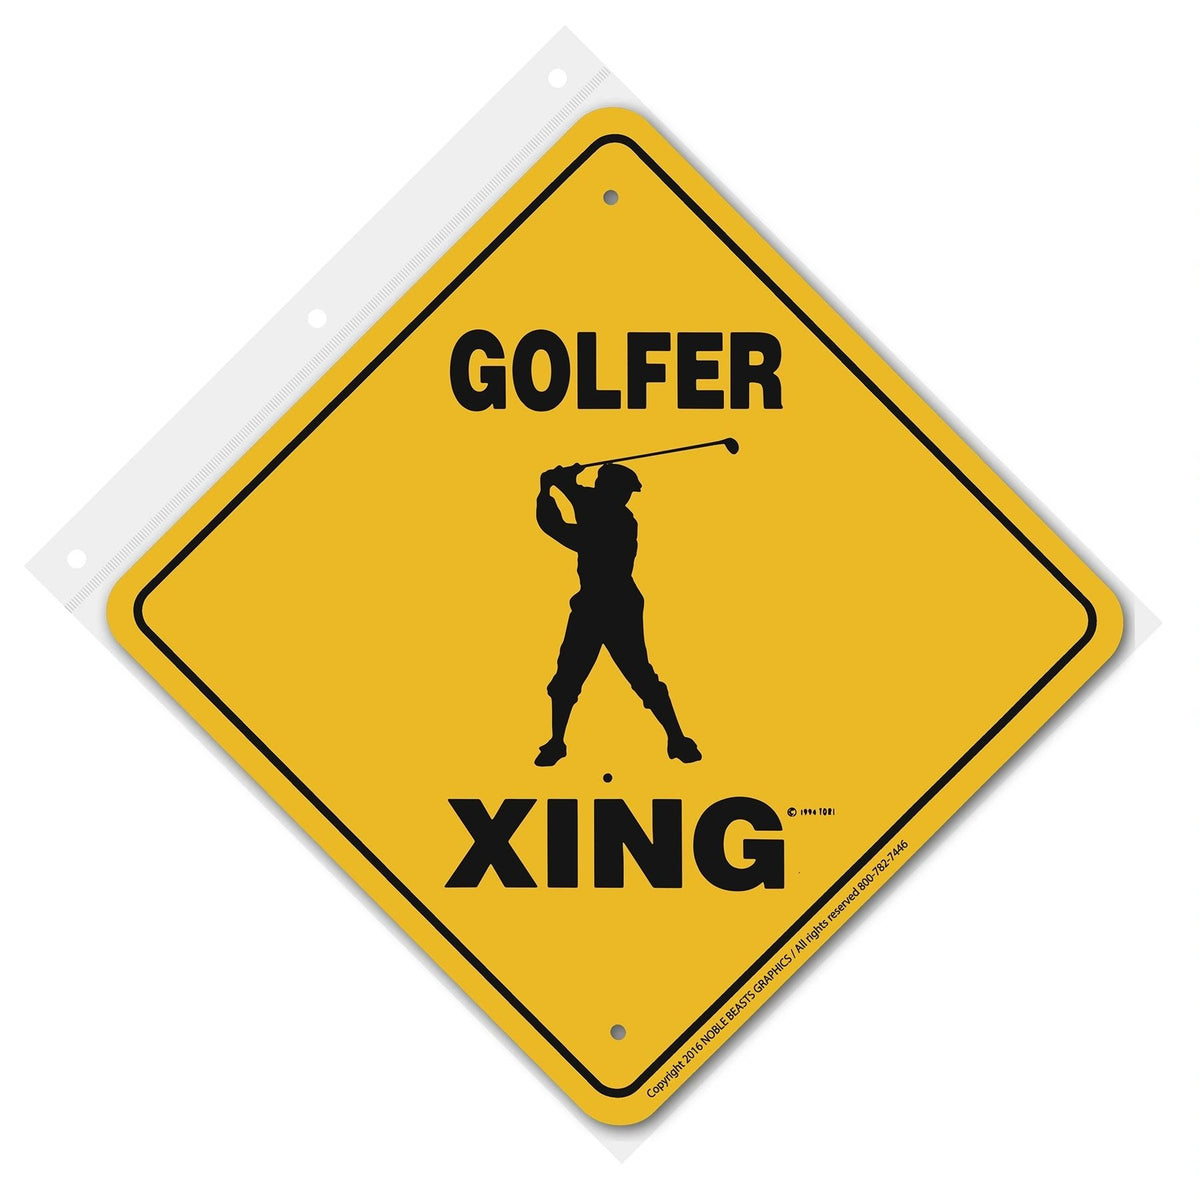 Golfer (Male) Xing Sign Aluminum 12 in X 12 in #20782